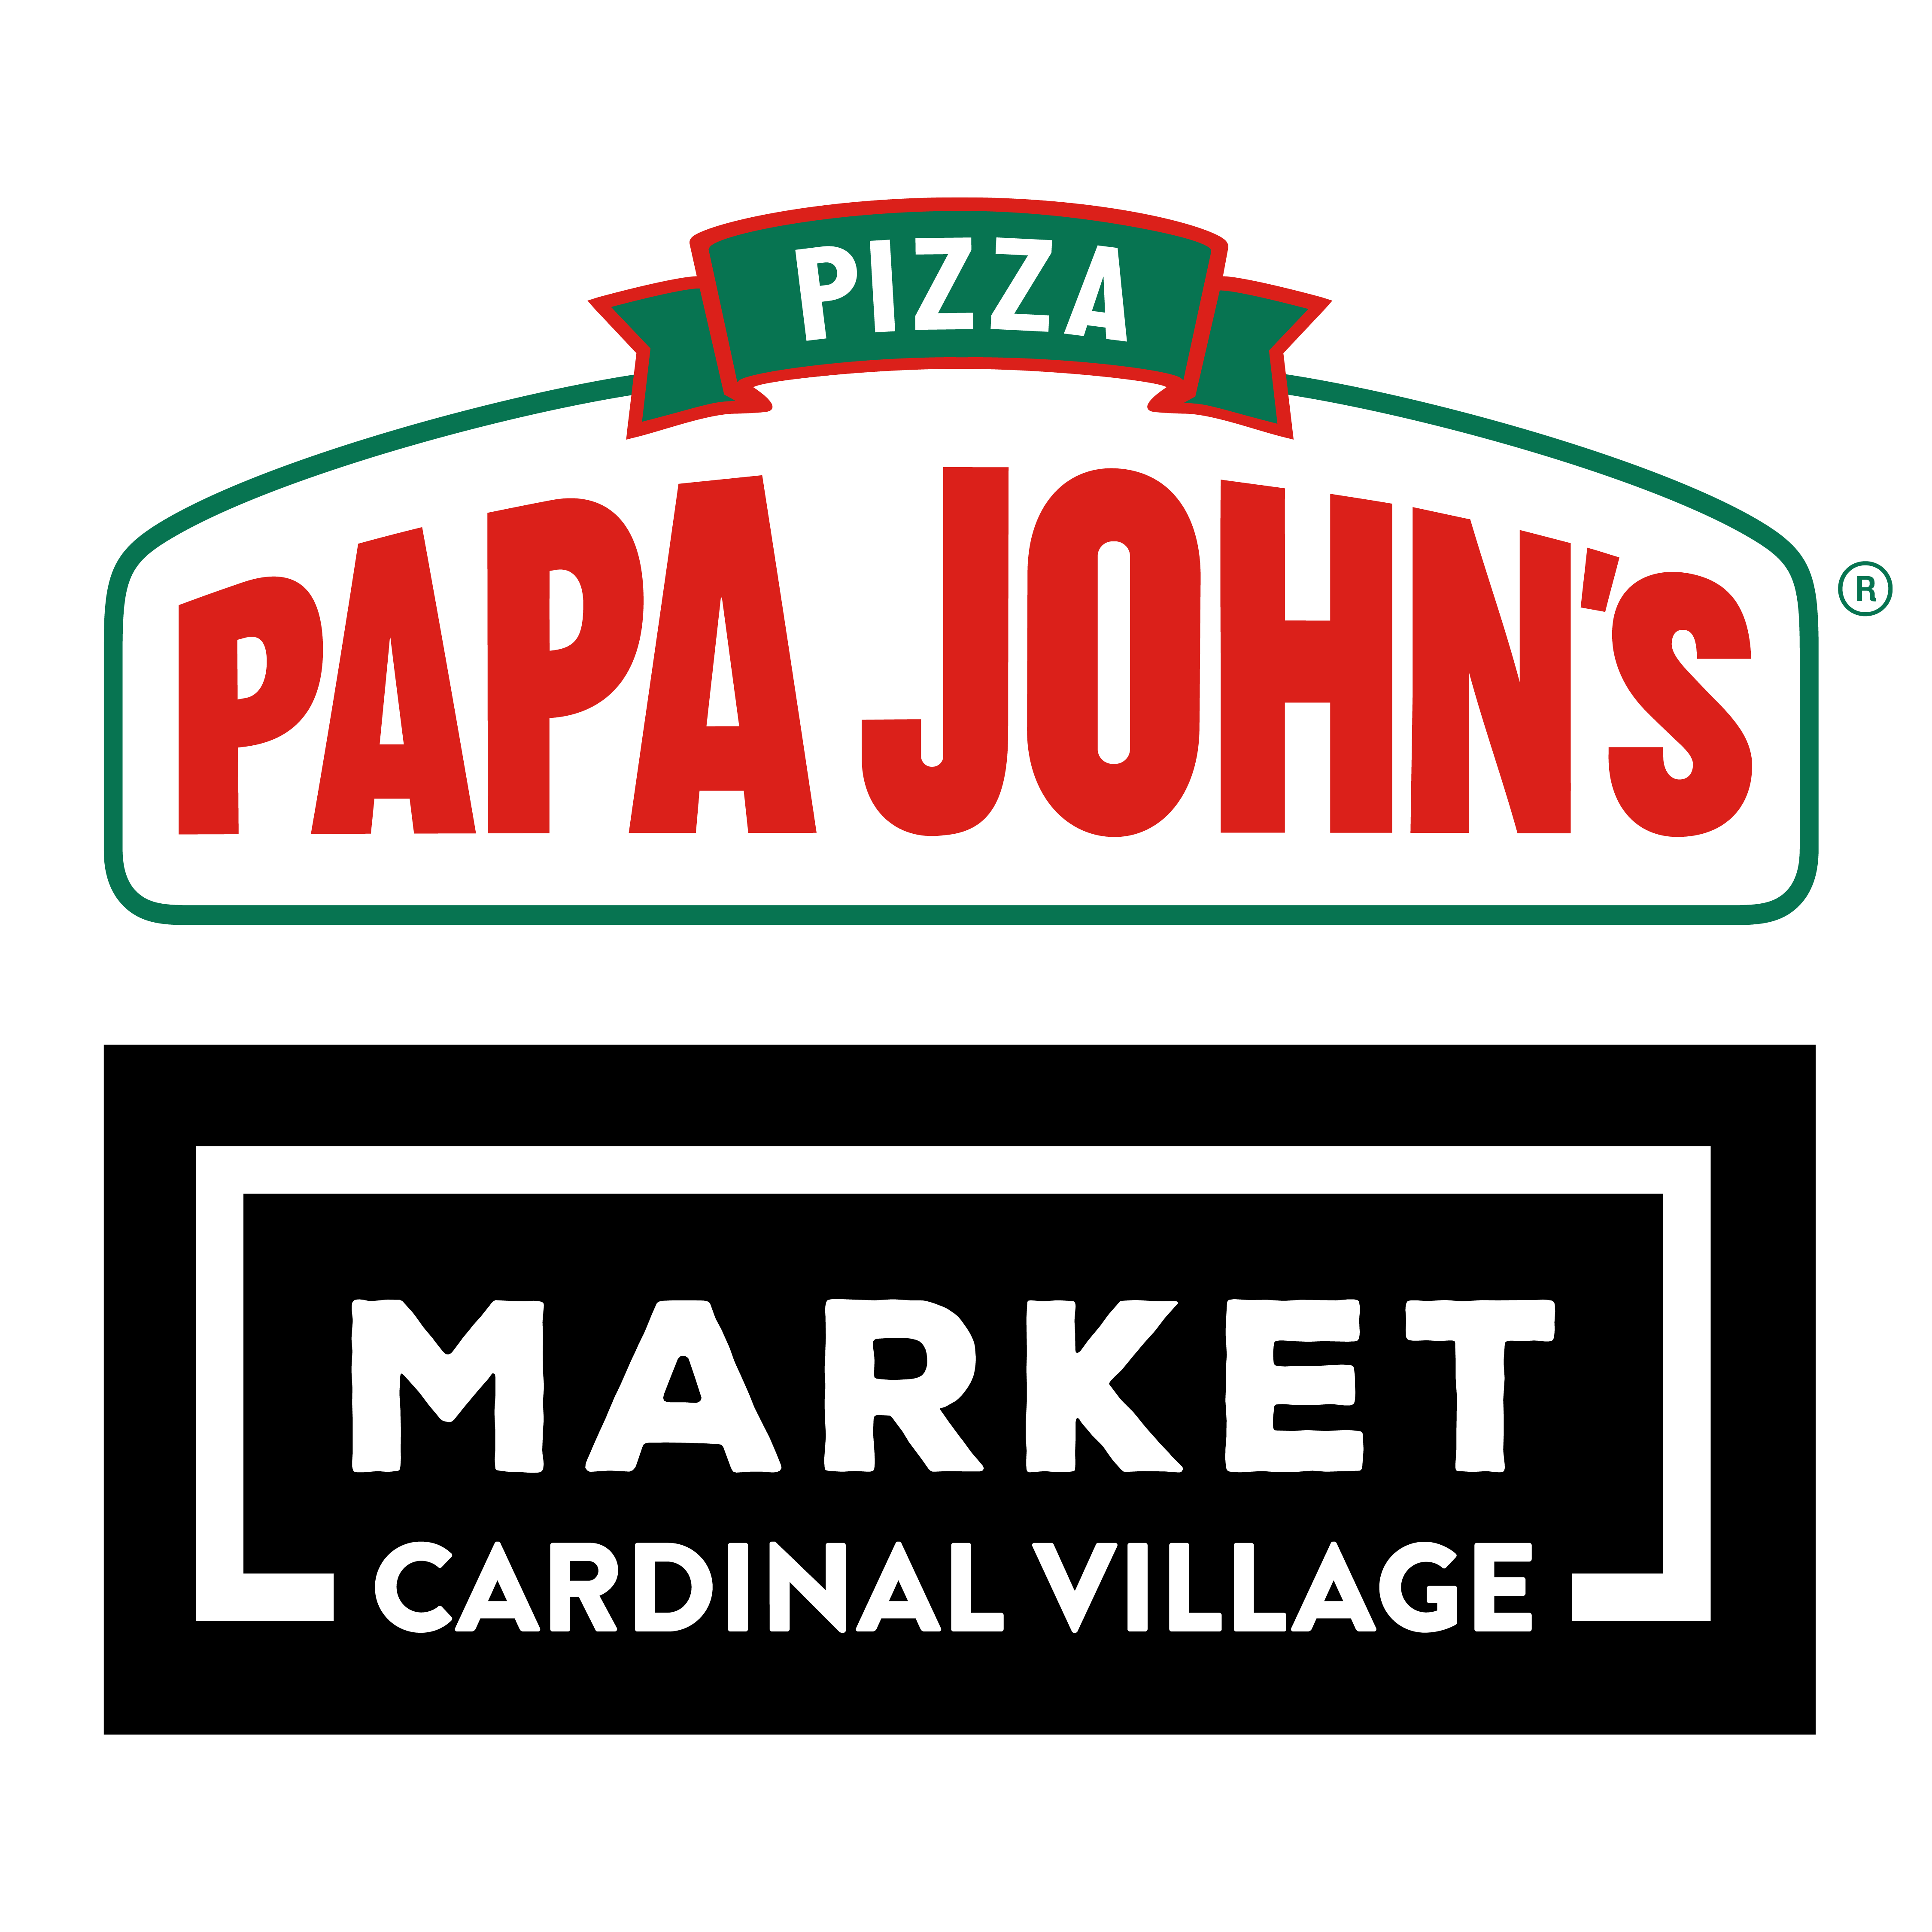 Market - Cardinal Village Papa John's Logo